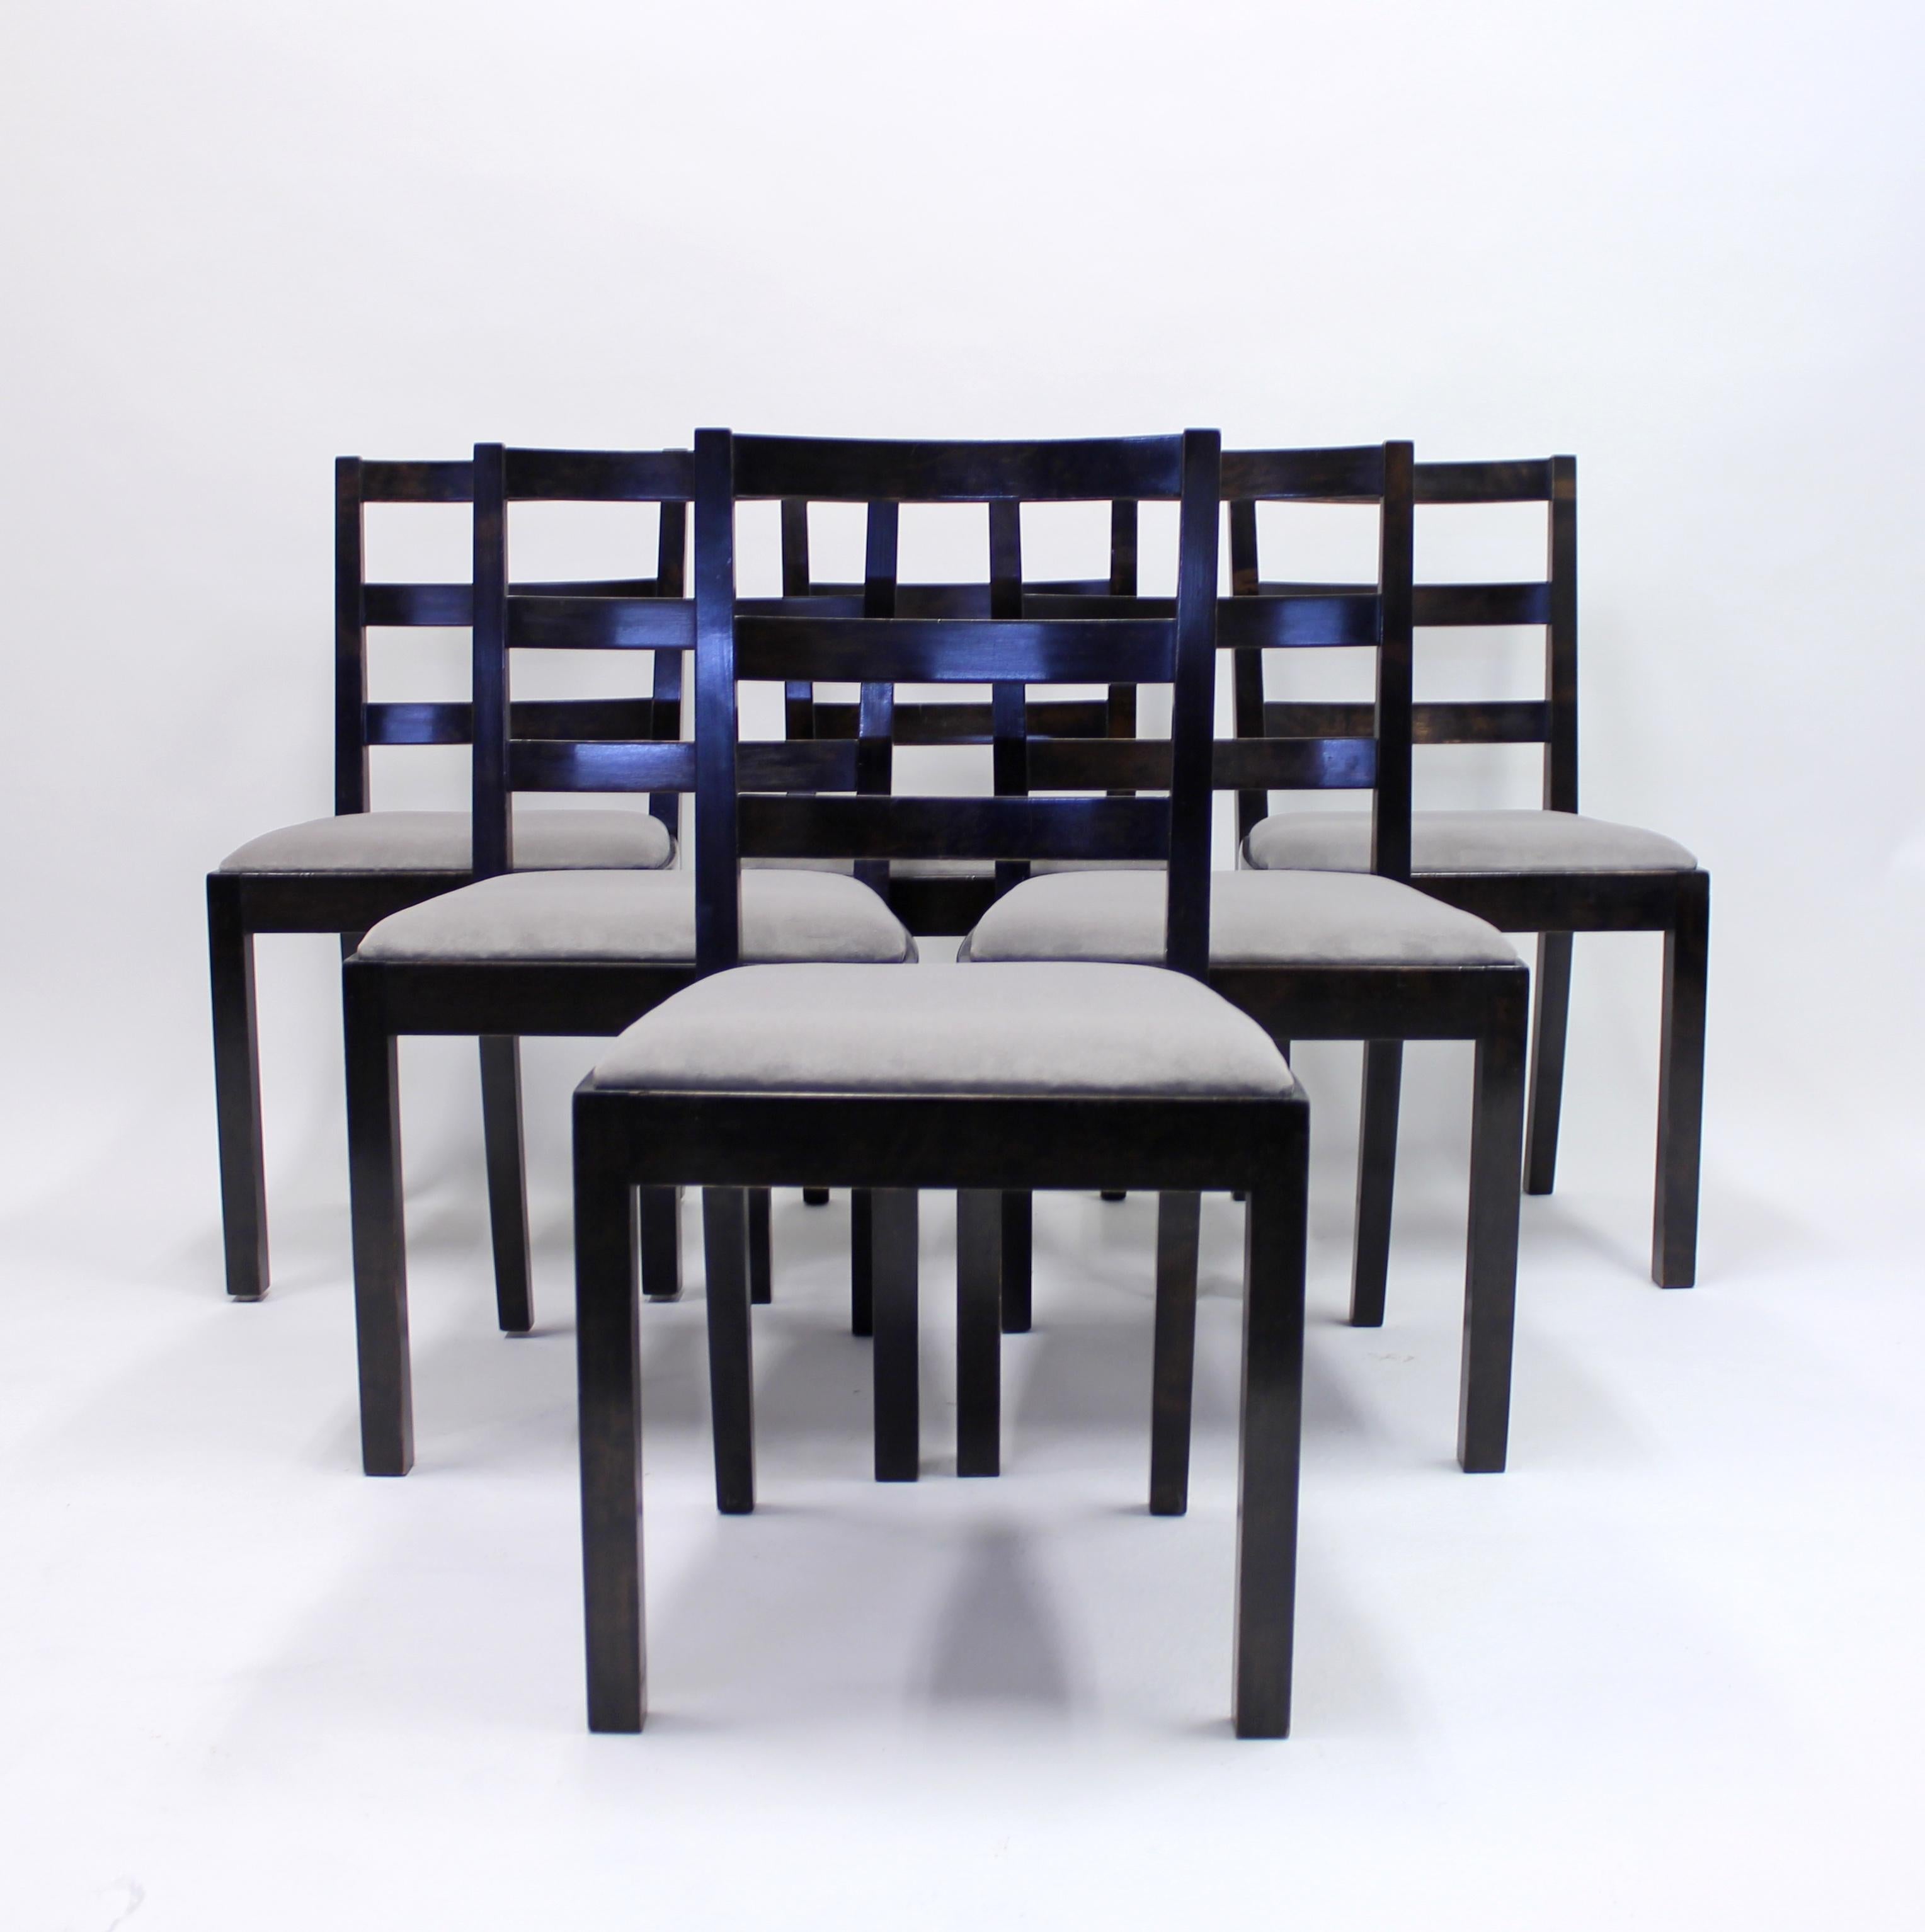 Swedish Typenko Chairs by Axel Einar Hjorth for Nordiska Kompaniet, 1930s, Set of 6